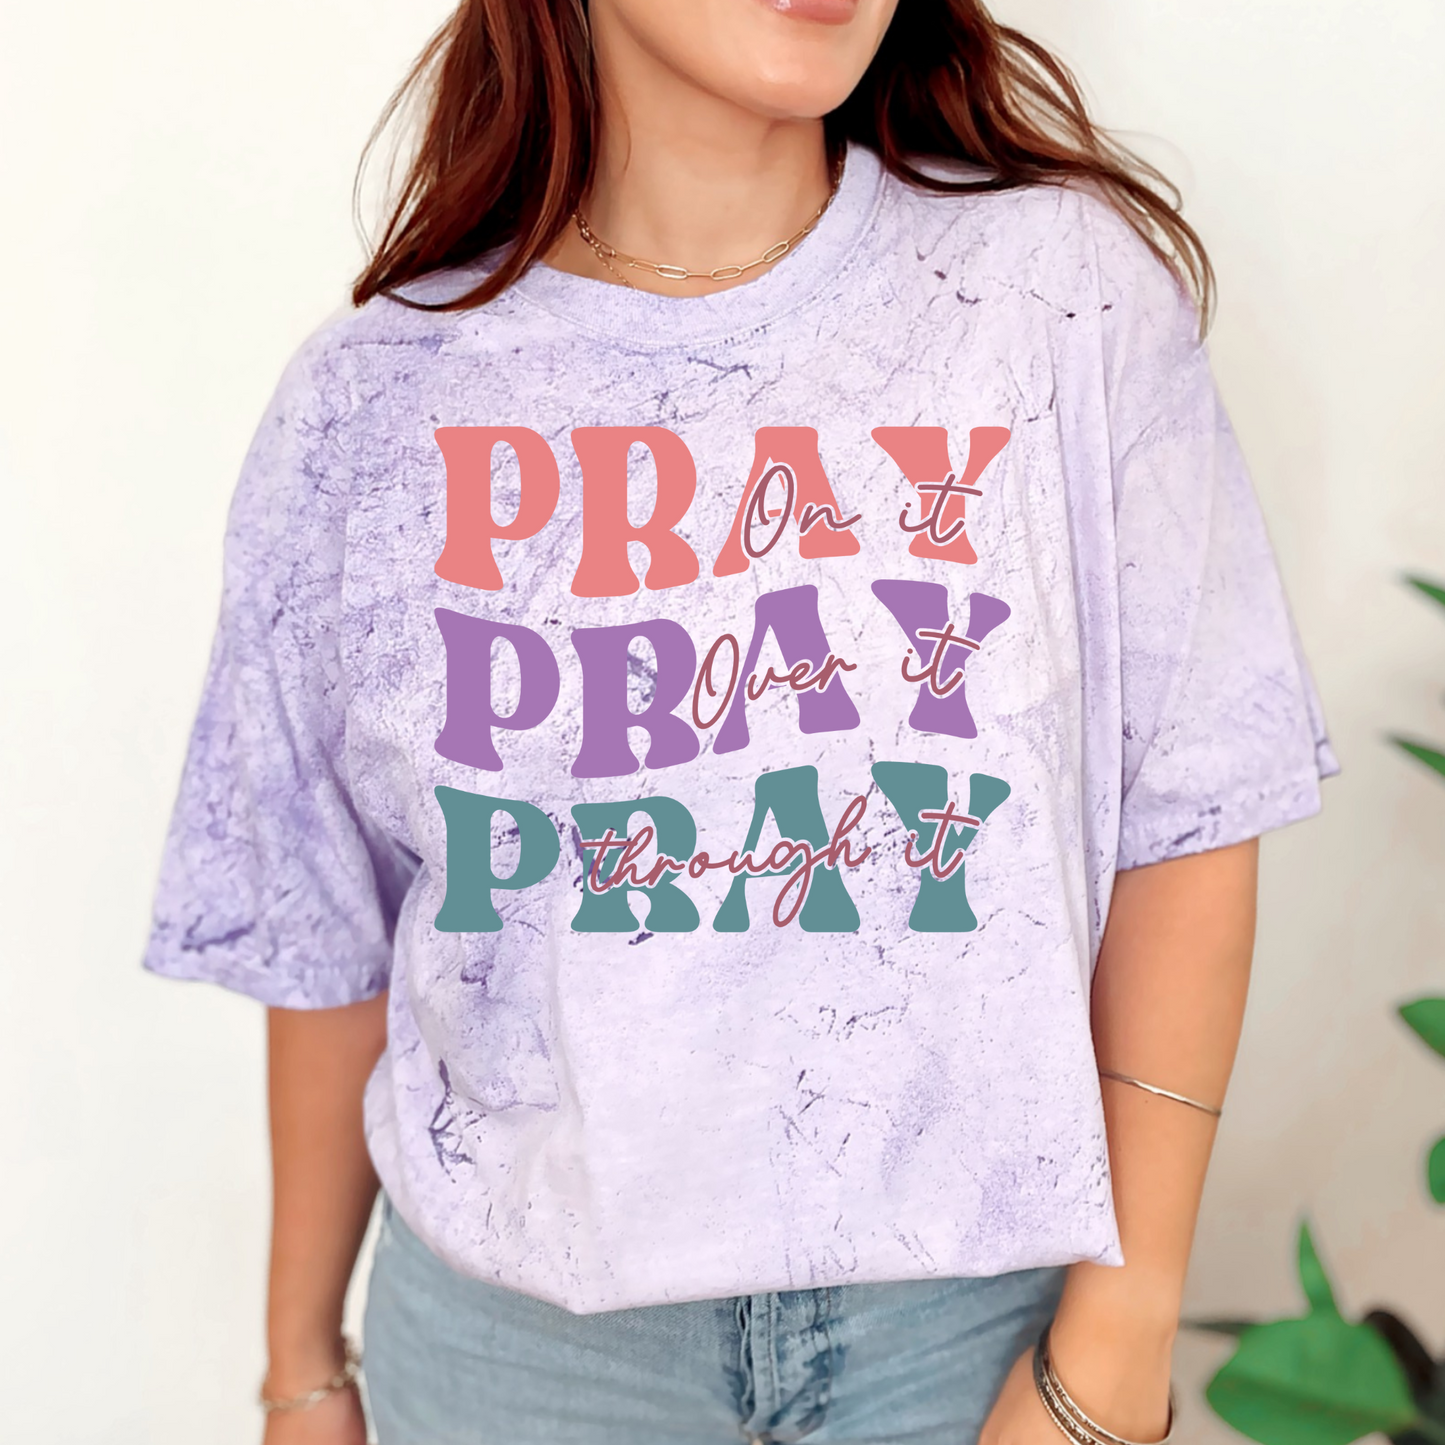 Pray x 3 Unisex Color Blast T-Shirt